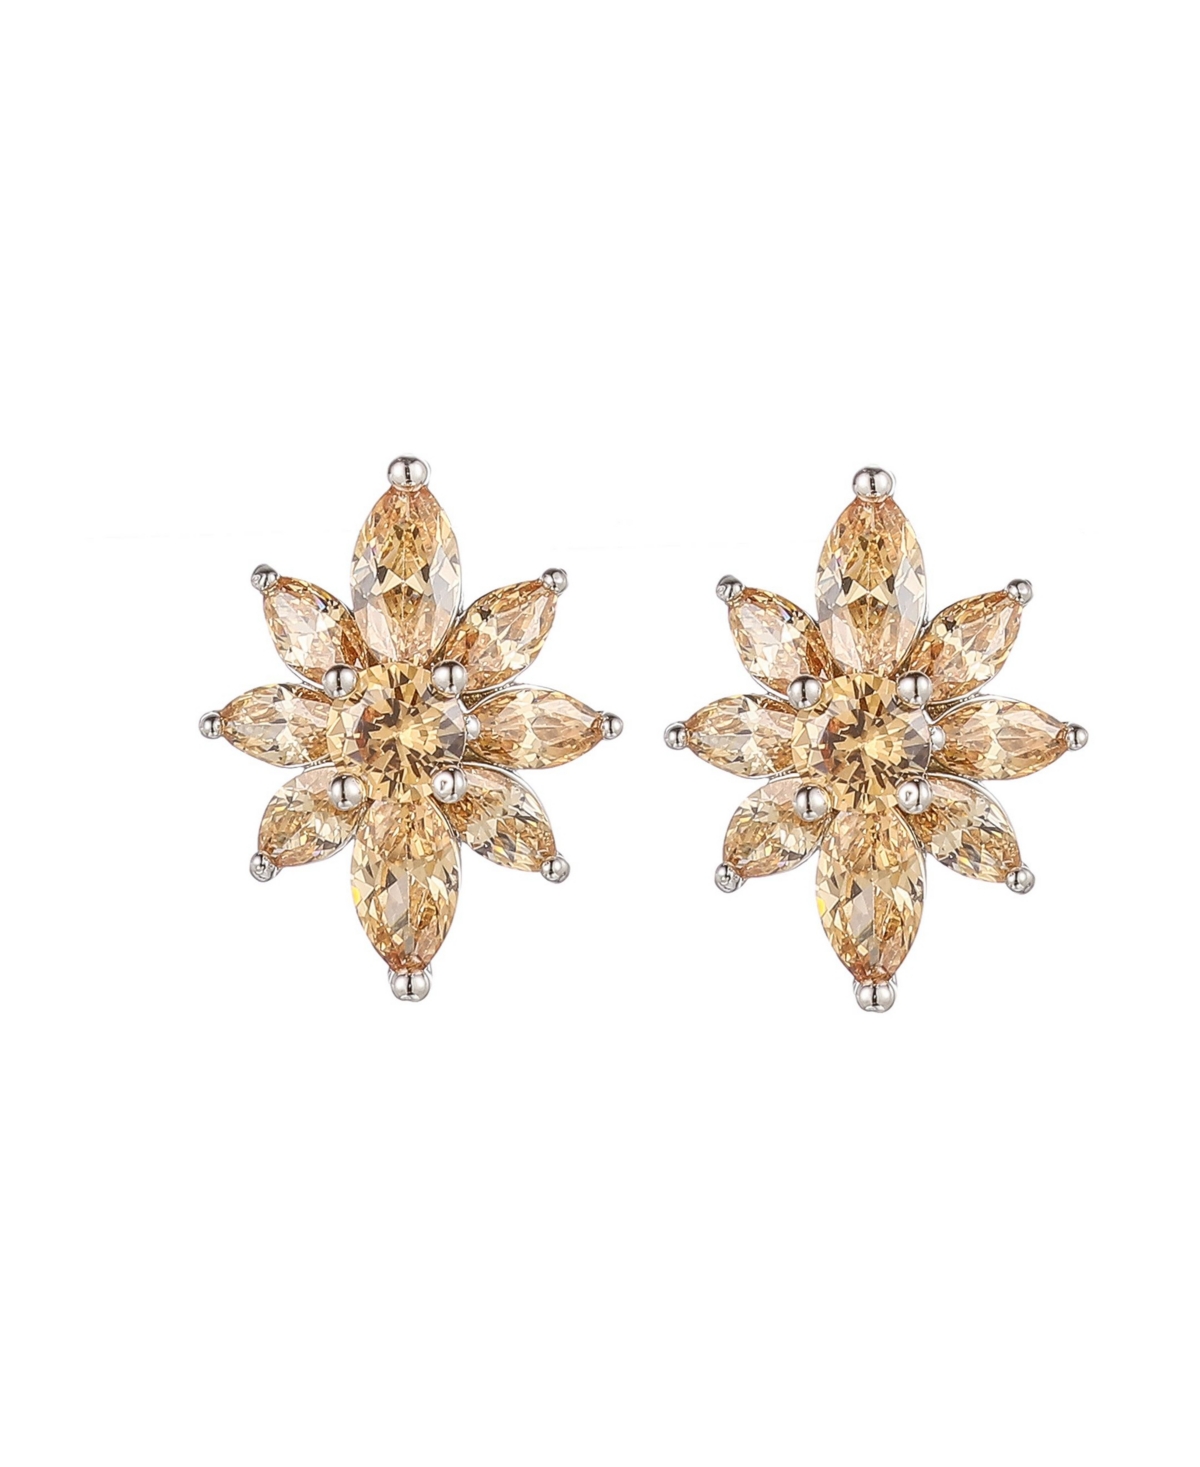 Silver-Tone Champagne Flower Cluster Earrings - Silver-Tone